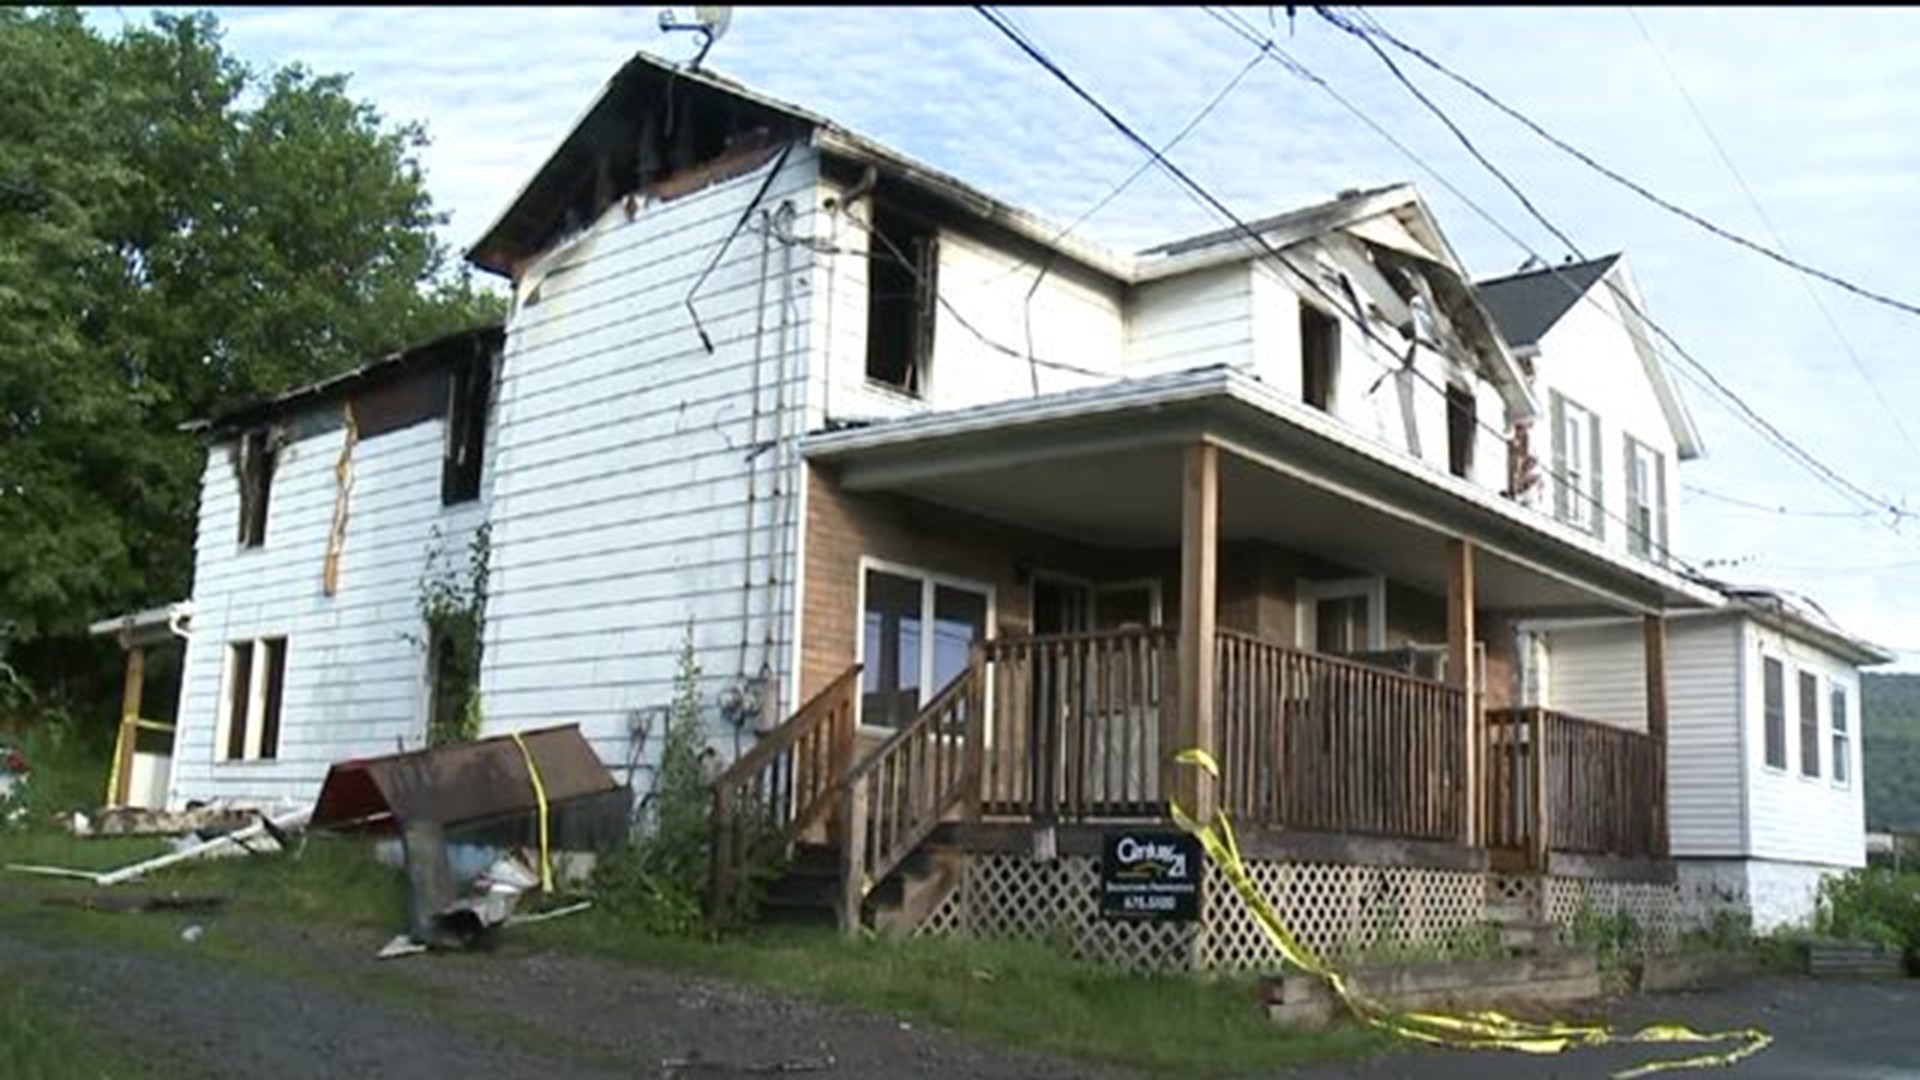 Neighbors Say Tires Slashed, Duplex Fire Set On Same Night